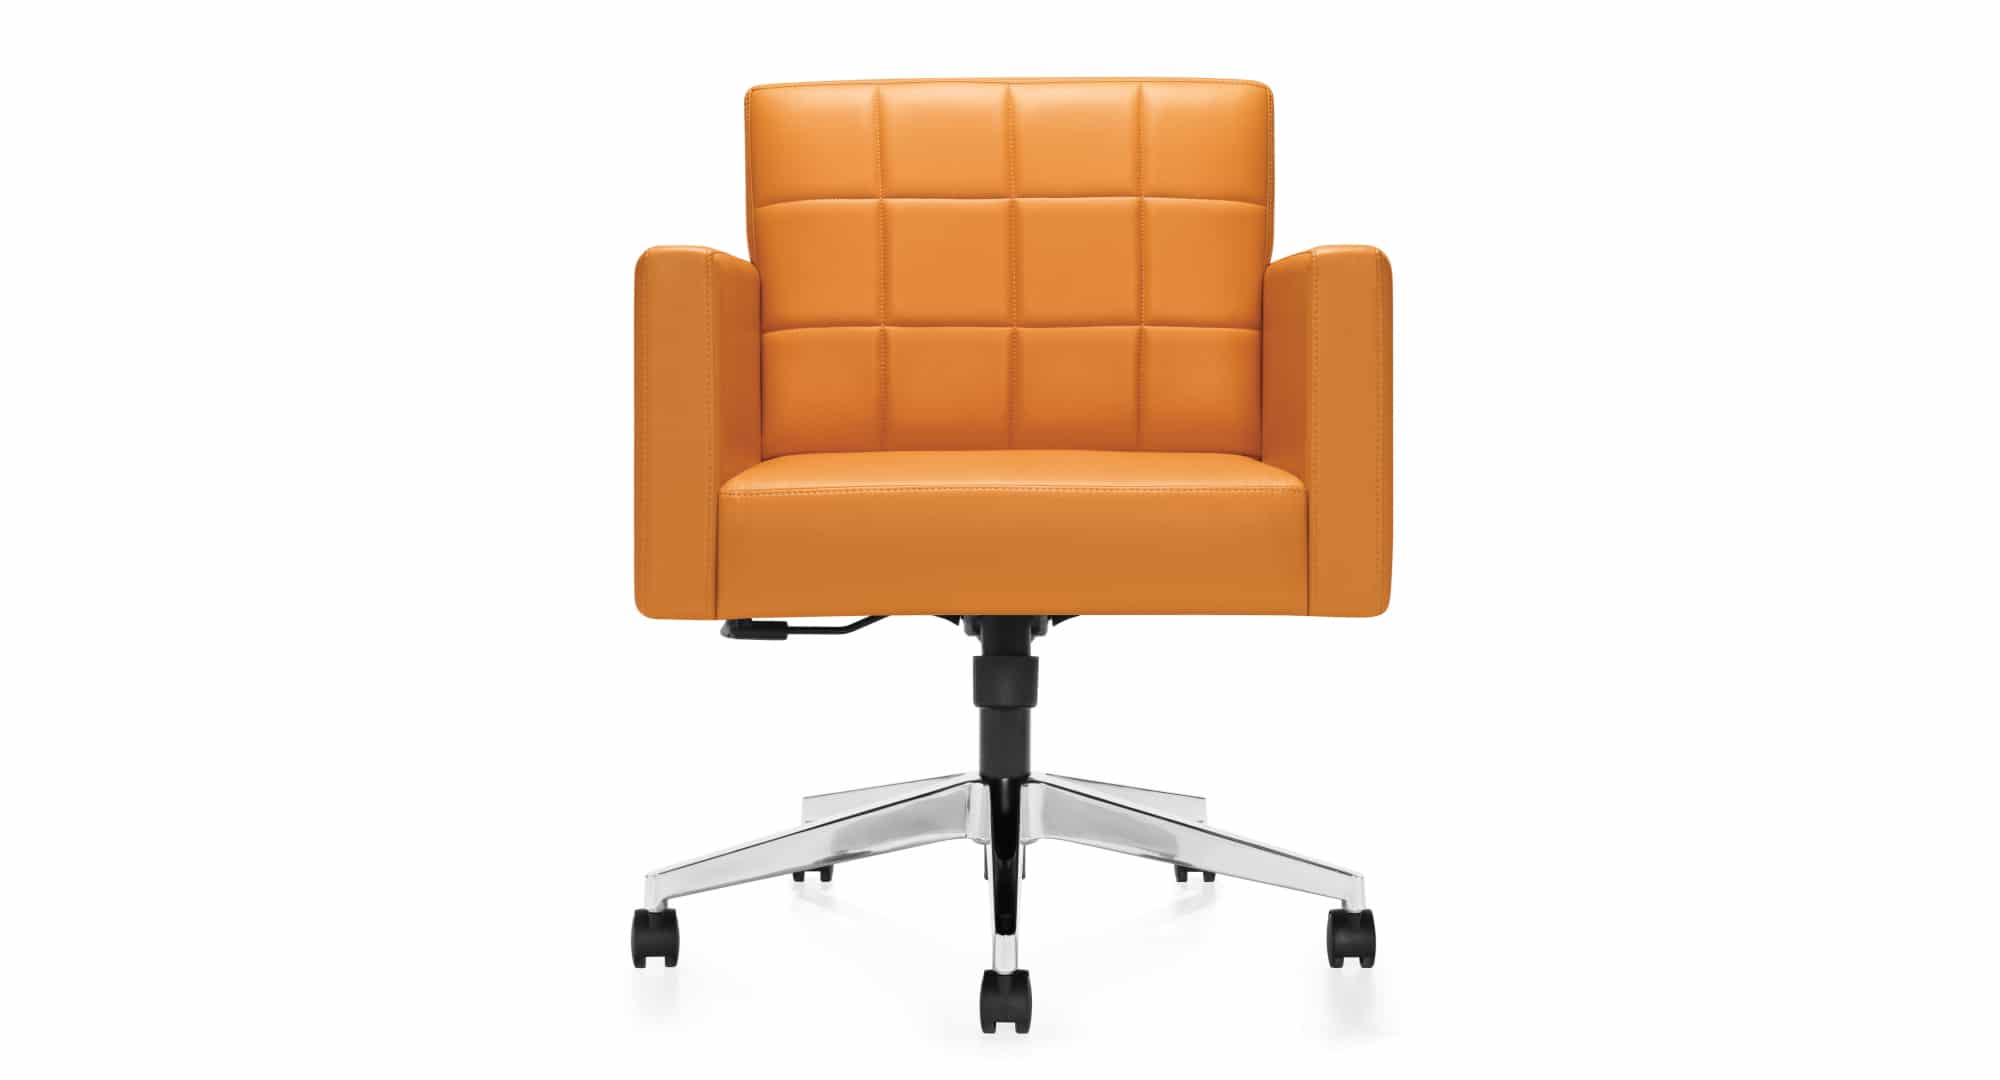 modern orange office chair with wheels